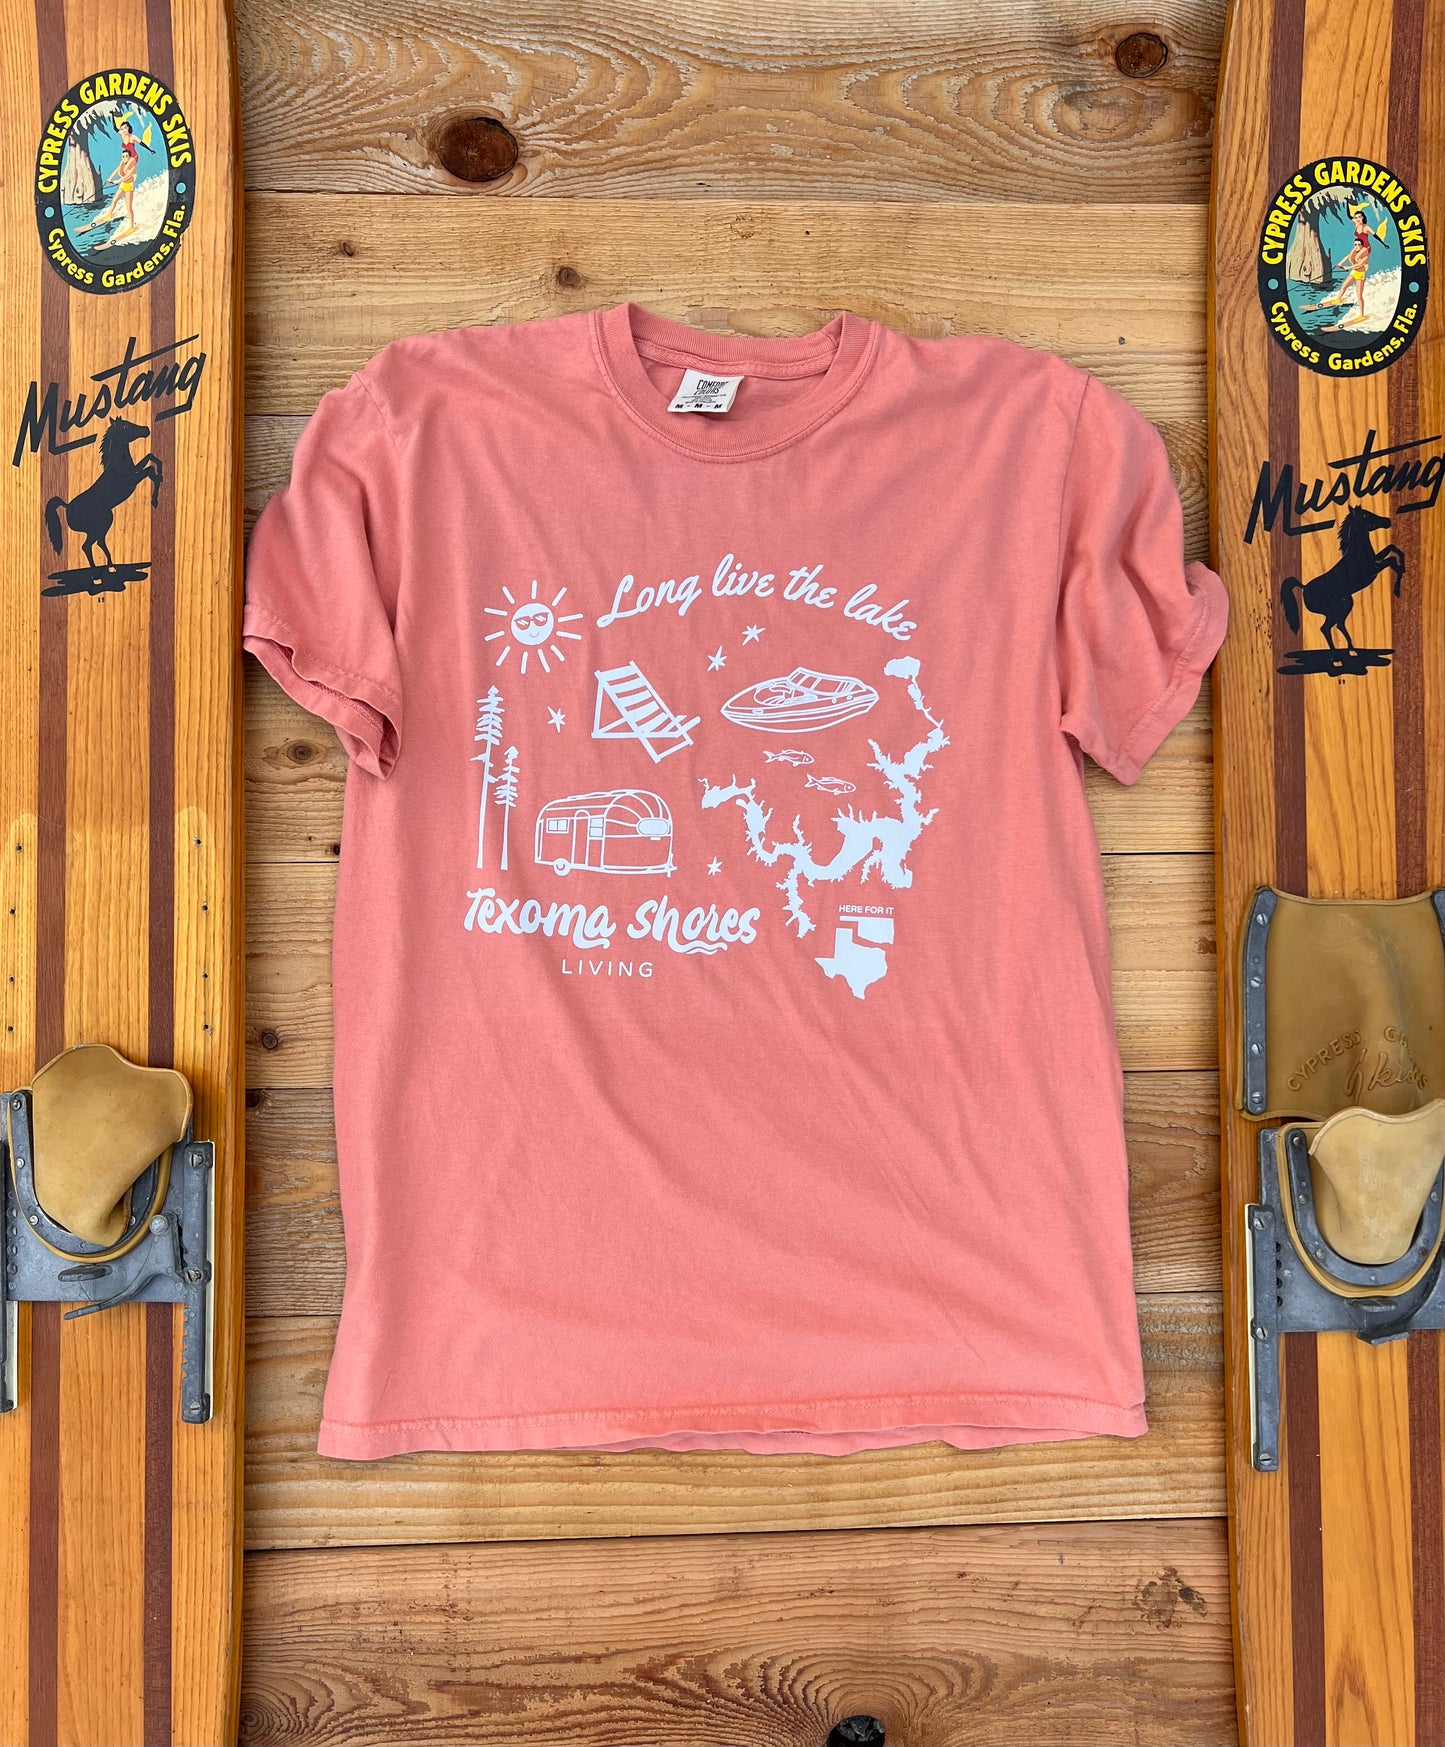 Texoma Shores Living T-Shirt